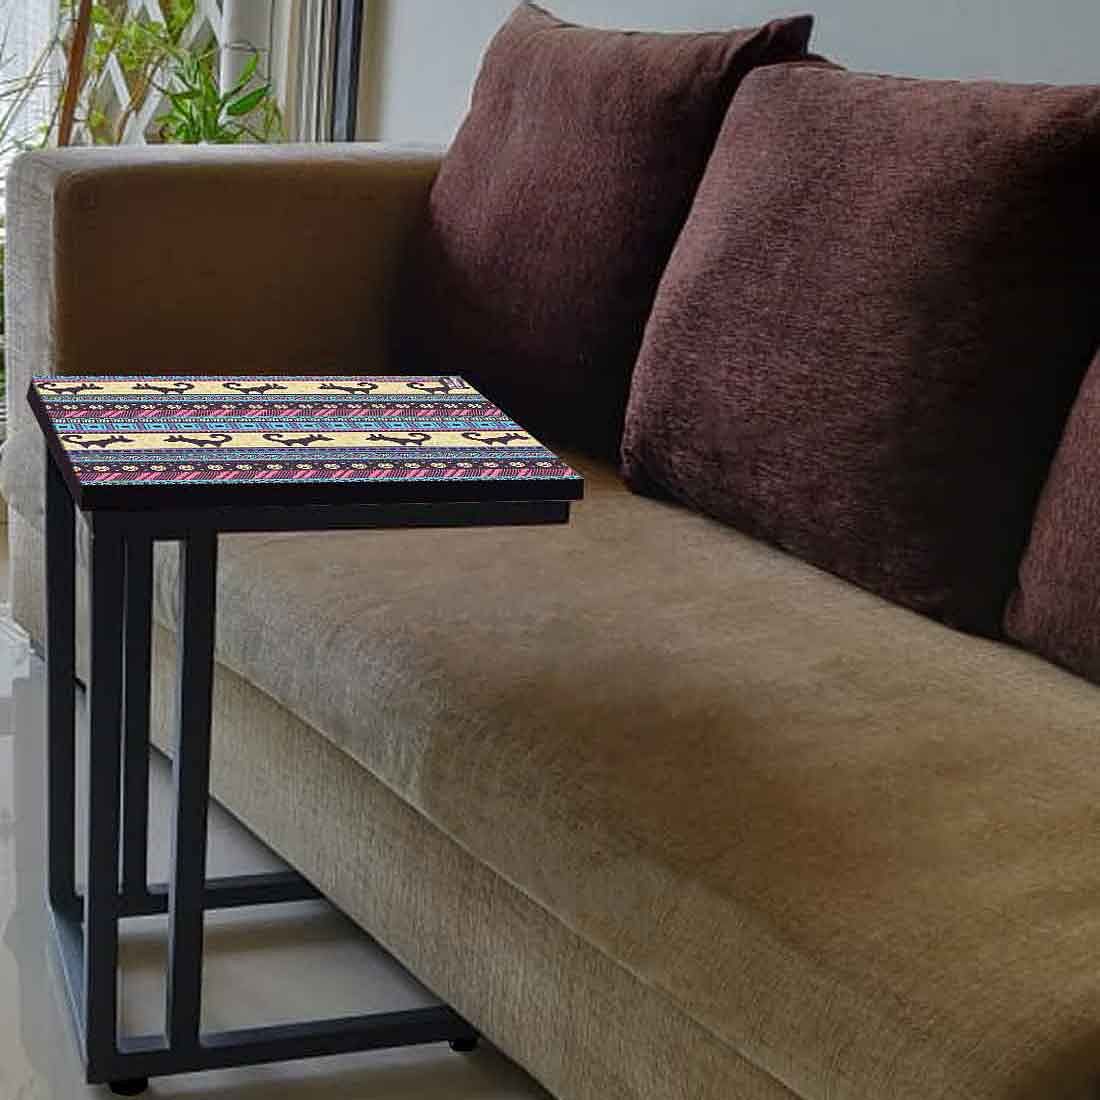 C Table For Sofa - Aztec Blue Cream Pattern Nutcase